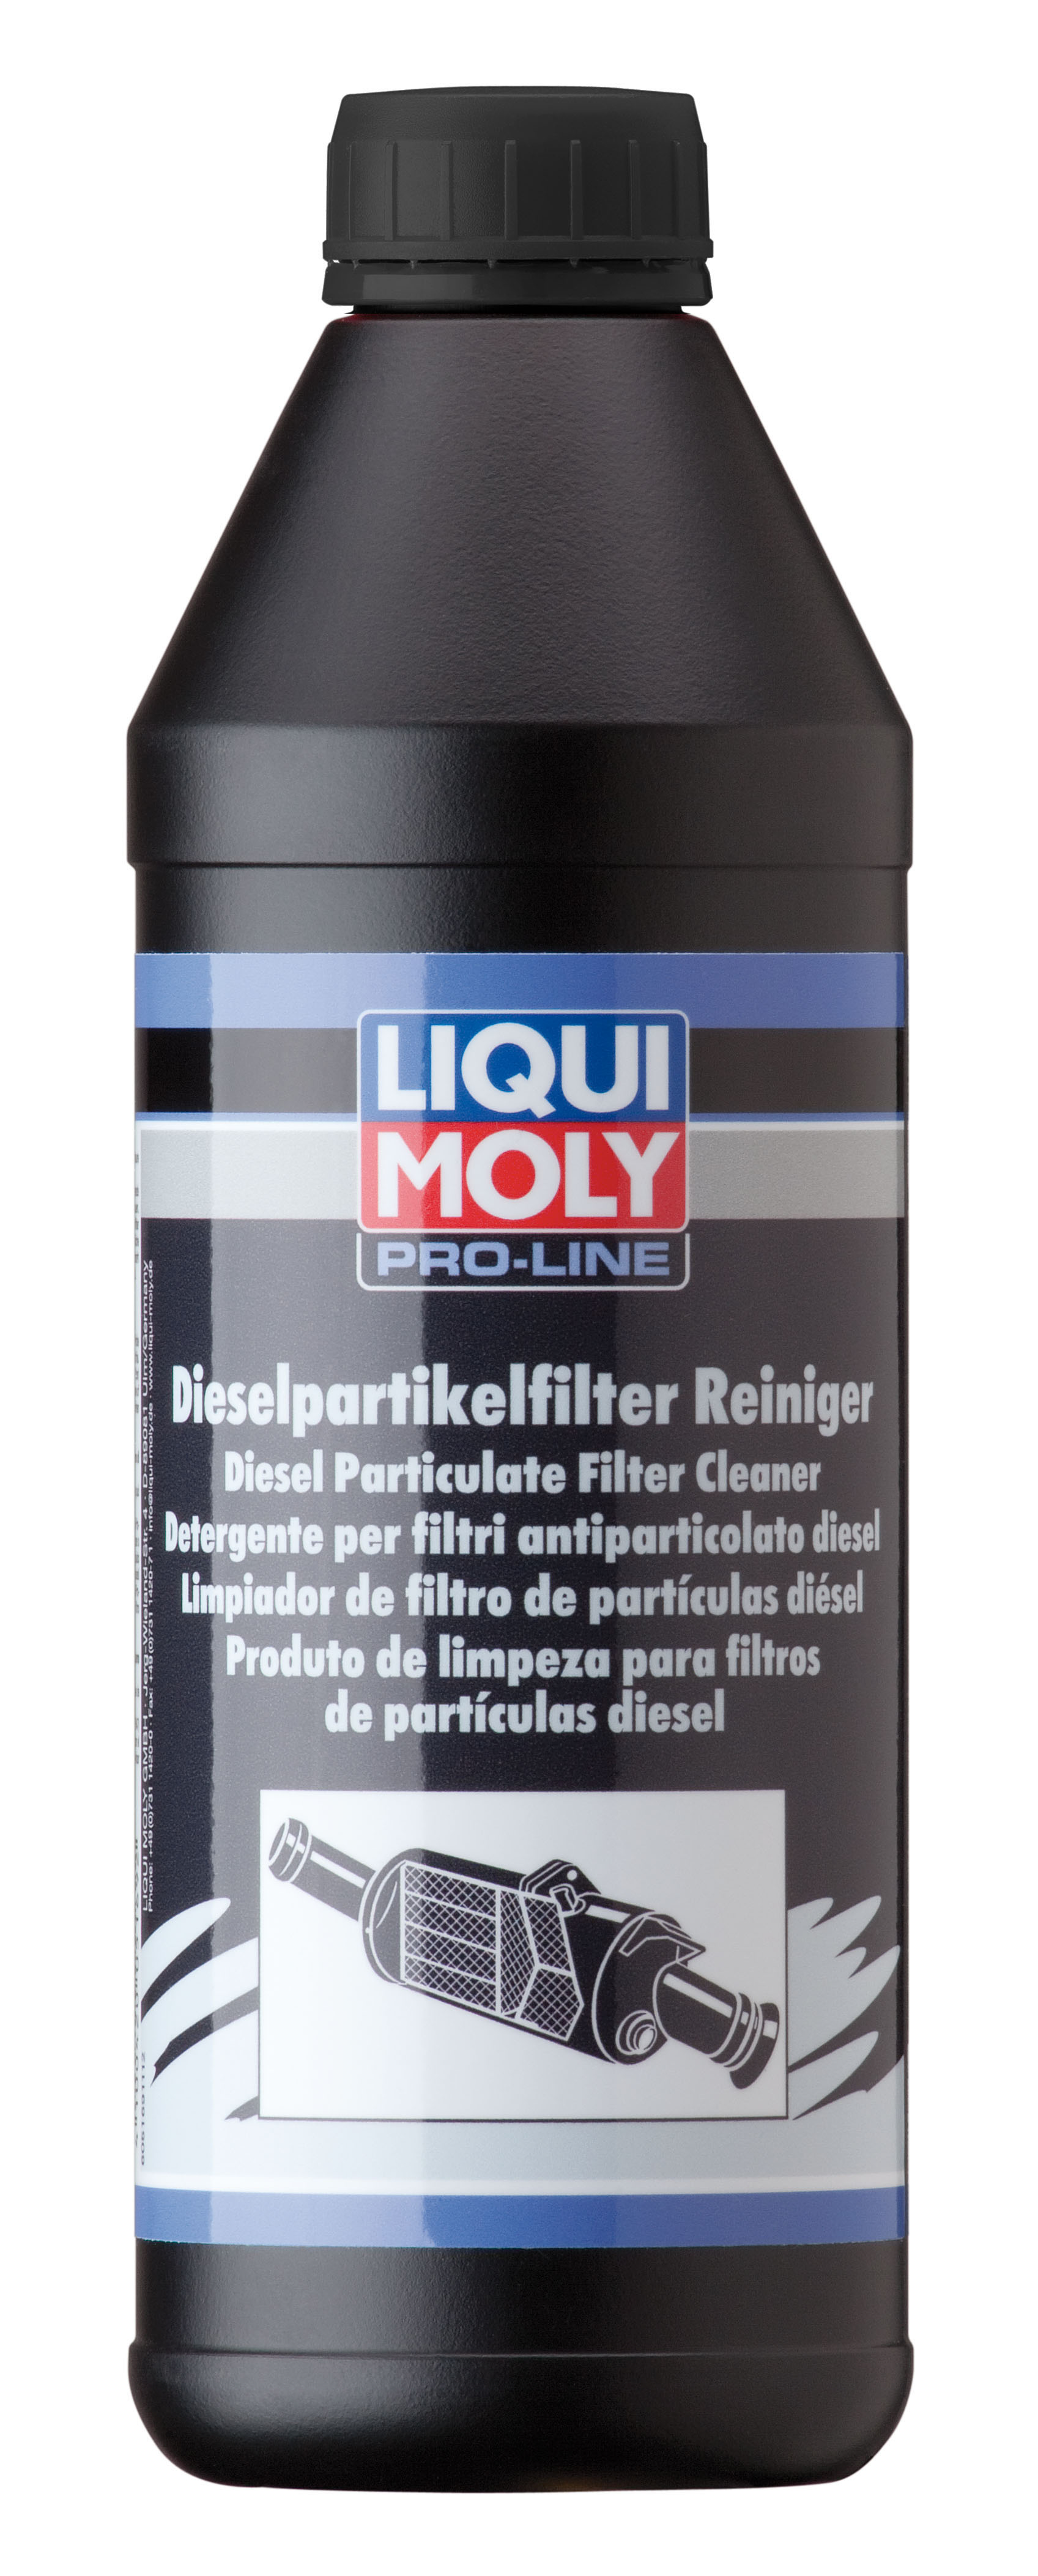 Liqui Moly 5169 Pro-Line Dieselpartikelfilter Reiniger 1l